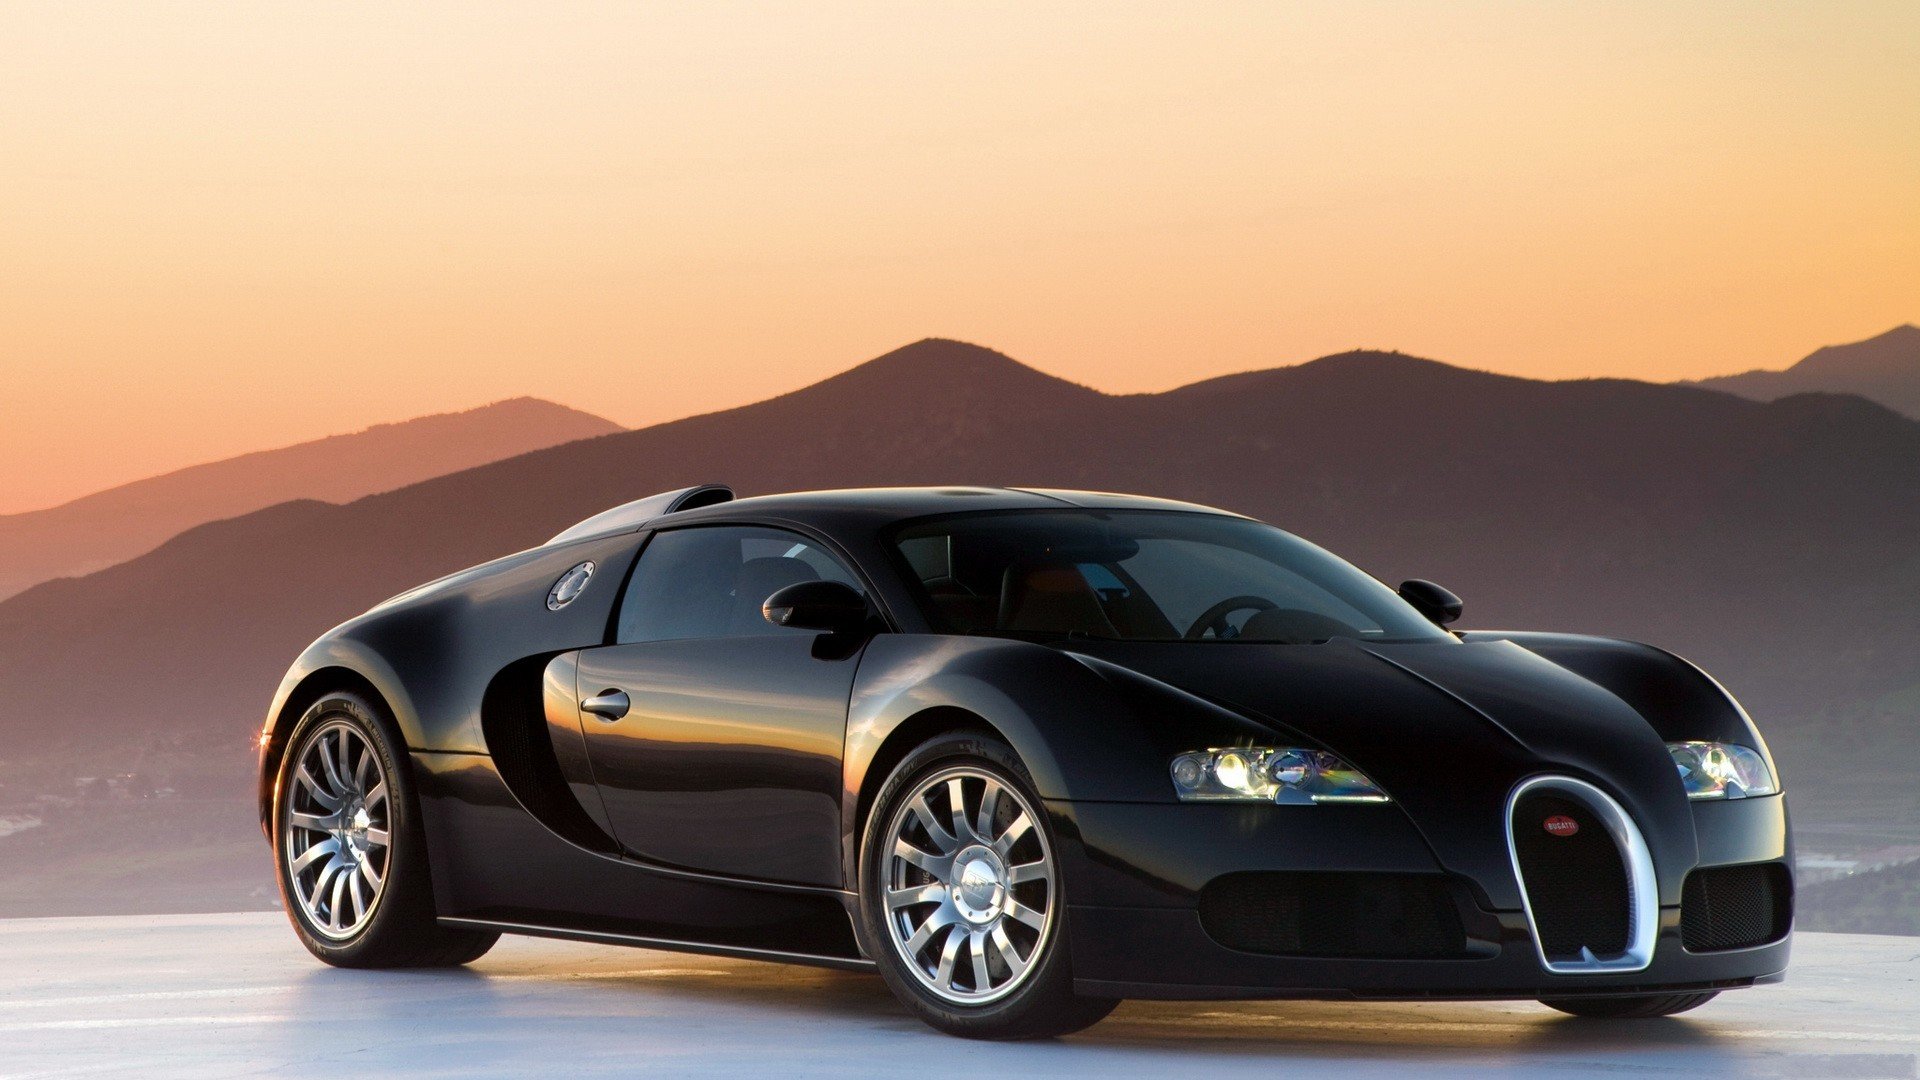 Awesome Bugatti Veyron free background ID:297901 for hd 1920x1080 desktop